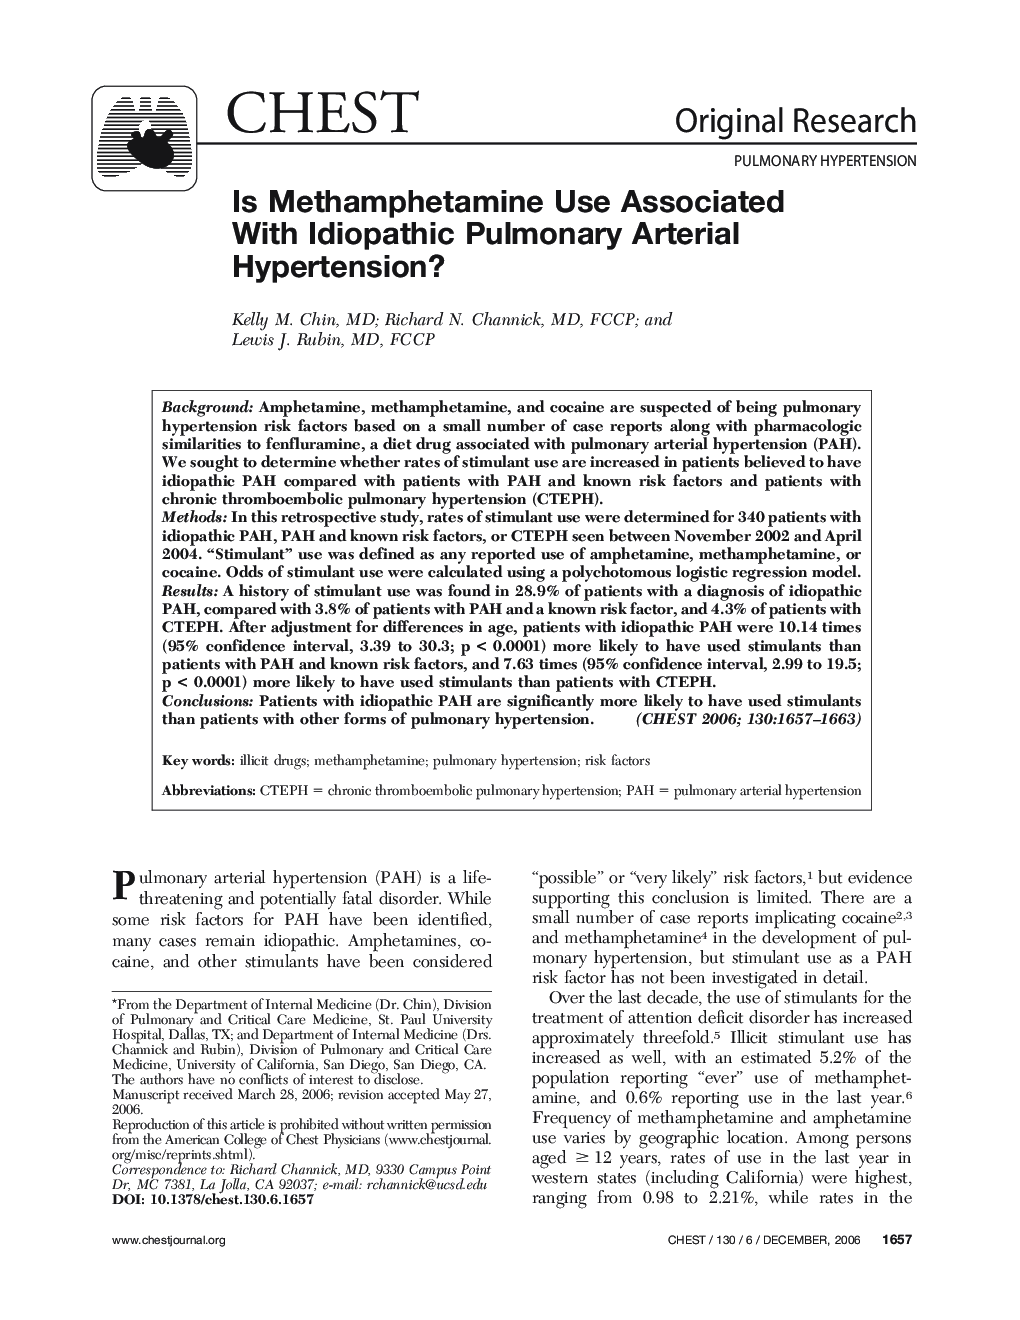 Is Methamphetamine Use Associated With Idiopathic Pulmonary Arterial Hypertension?